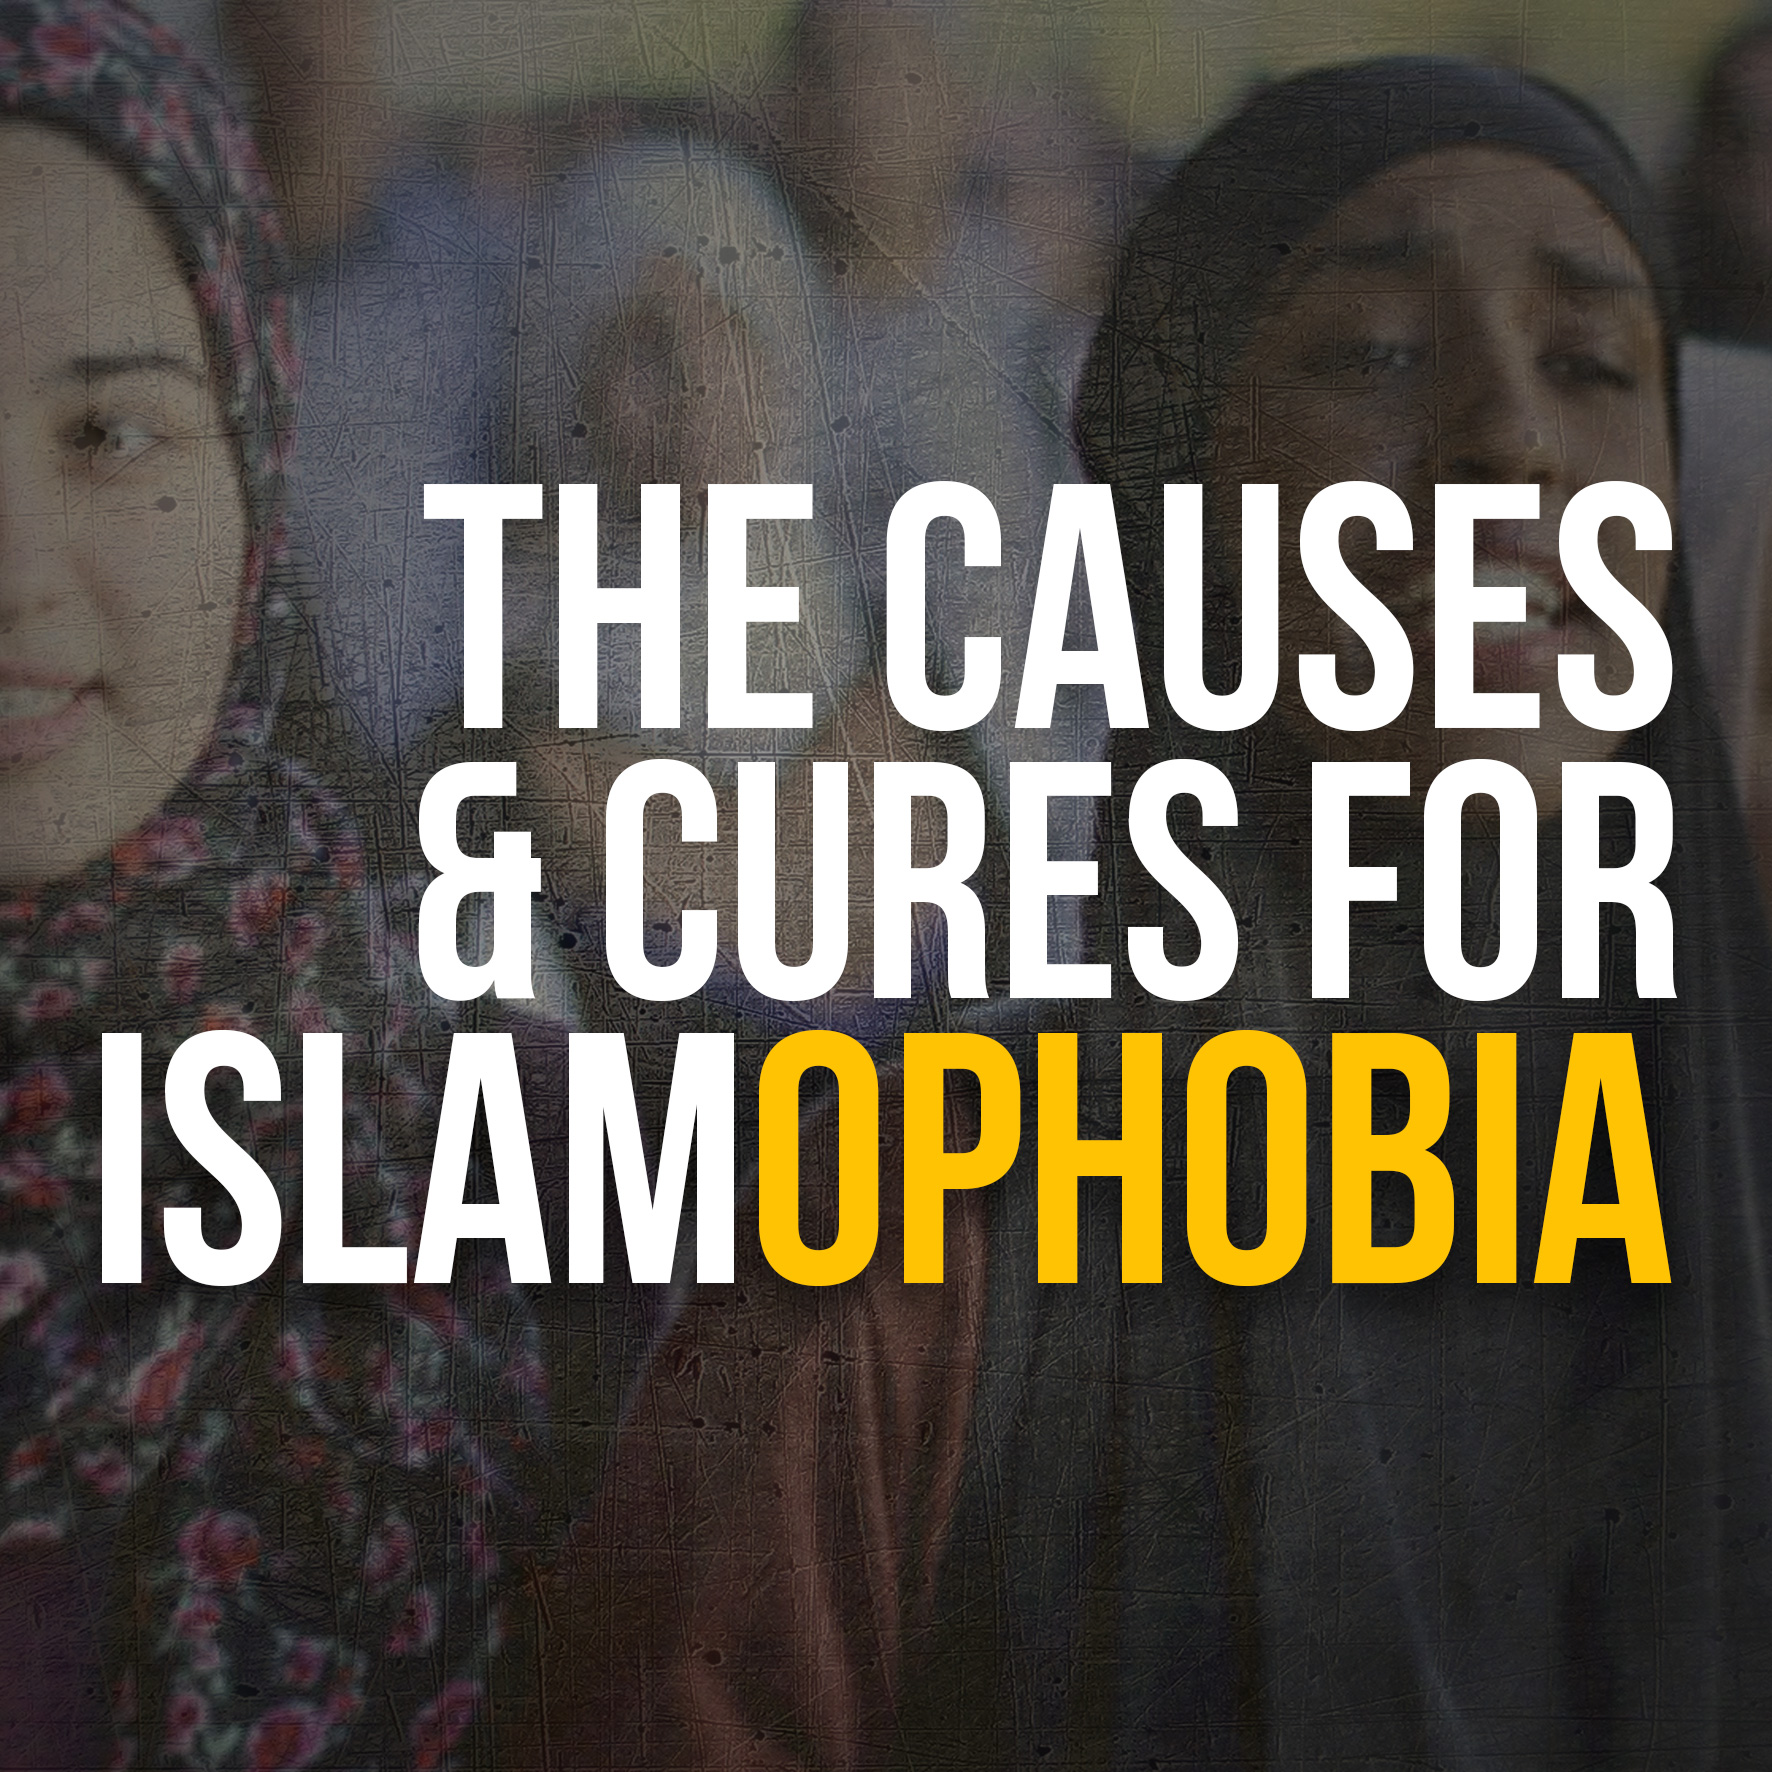 essay on islam of phobia